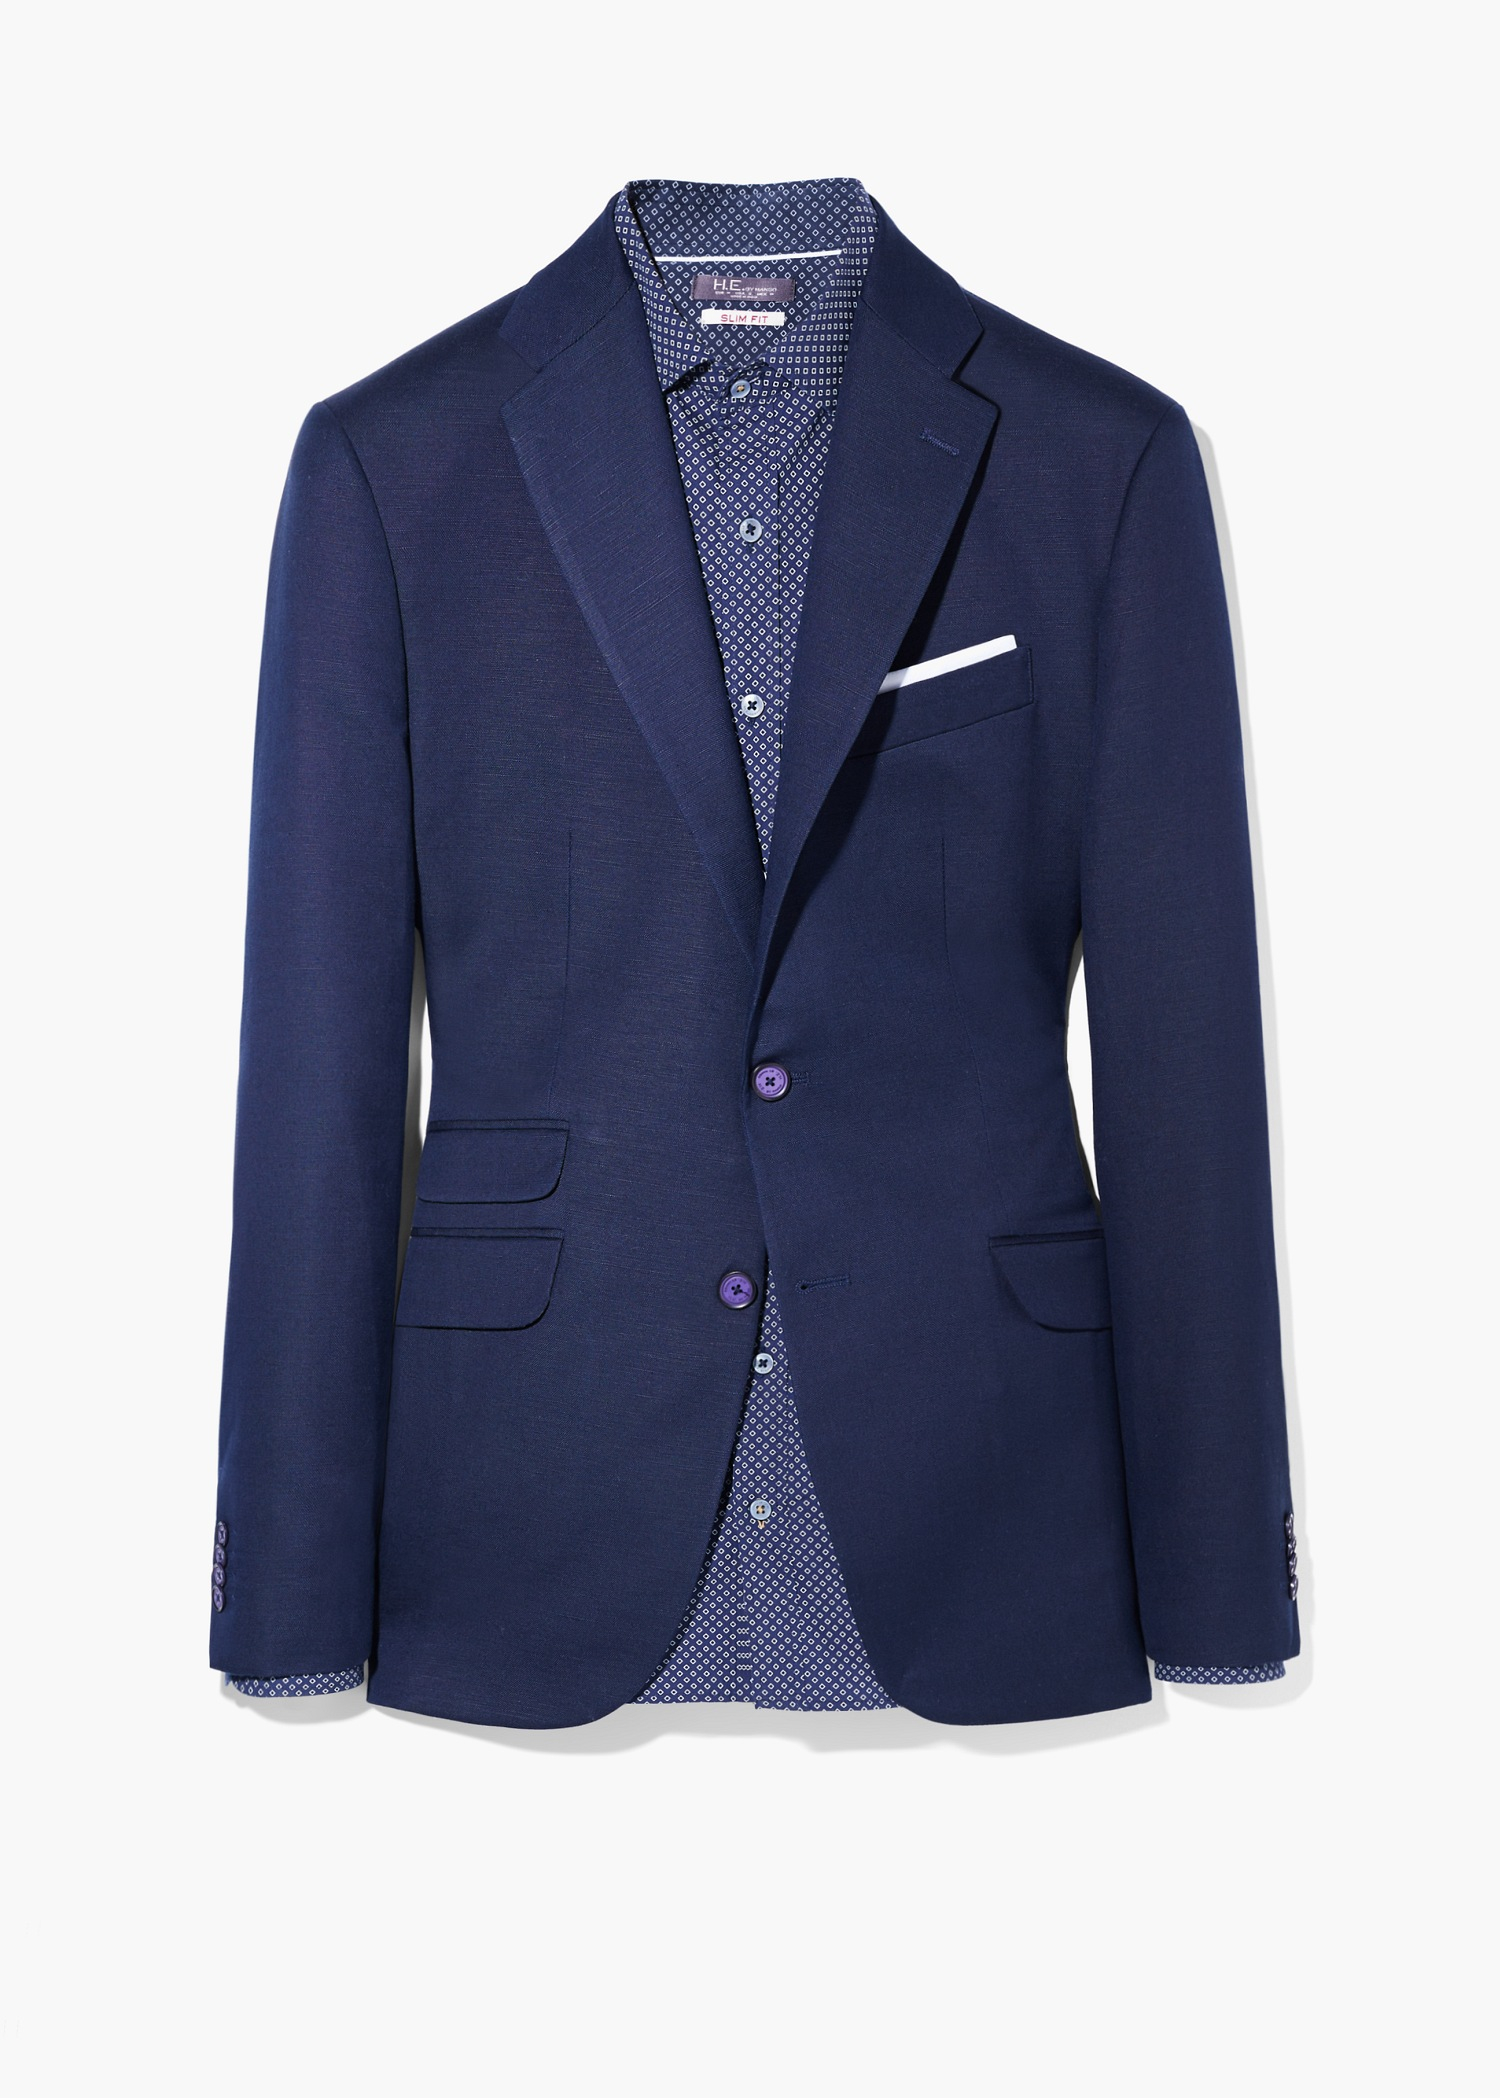 Lyst Mango Slim Fit  Linen Blend Suit  Blazer  in Blue for Men